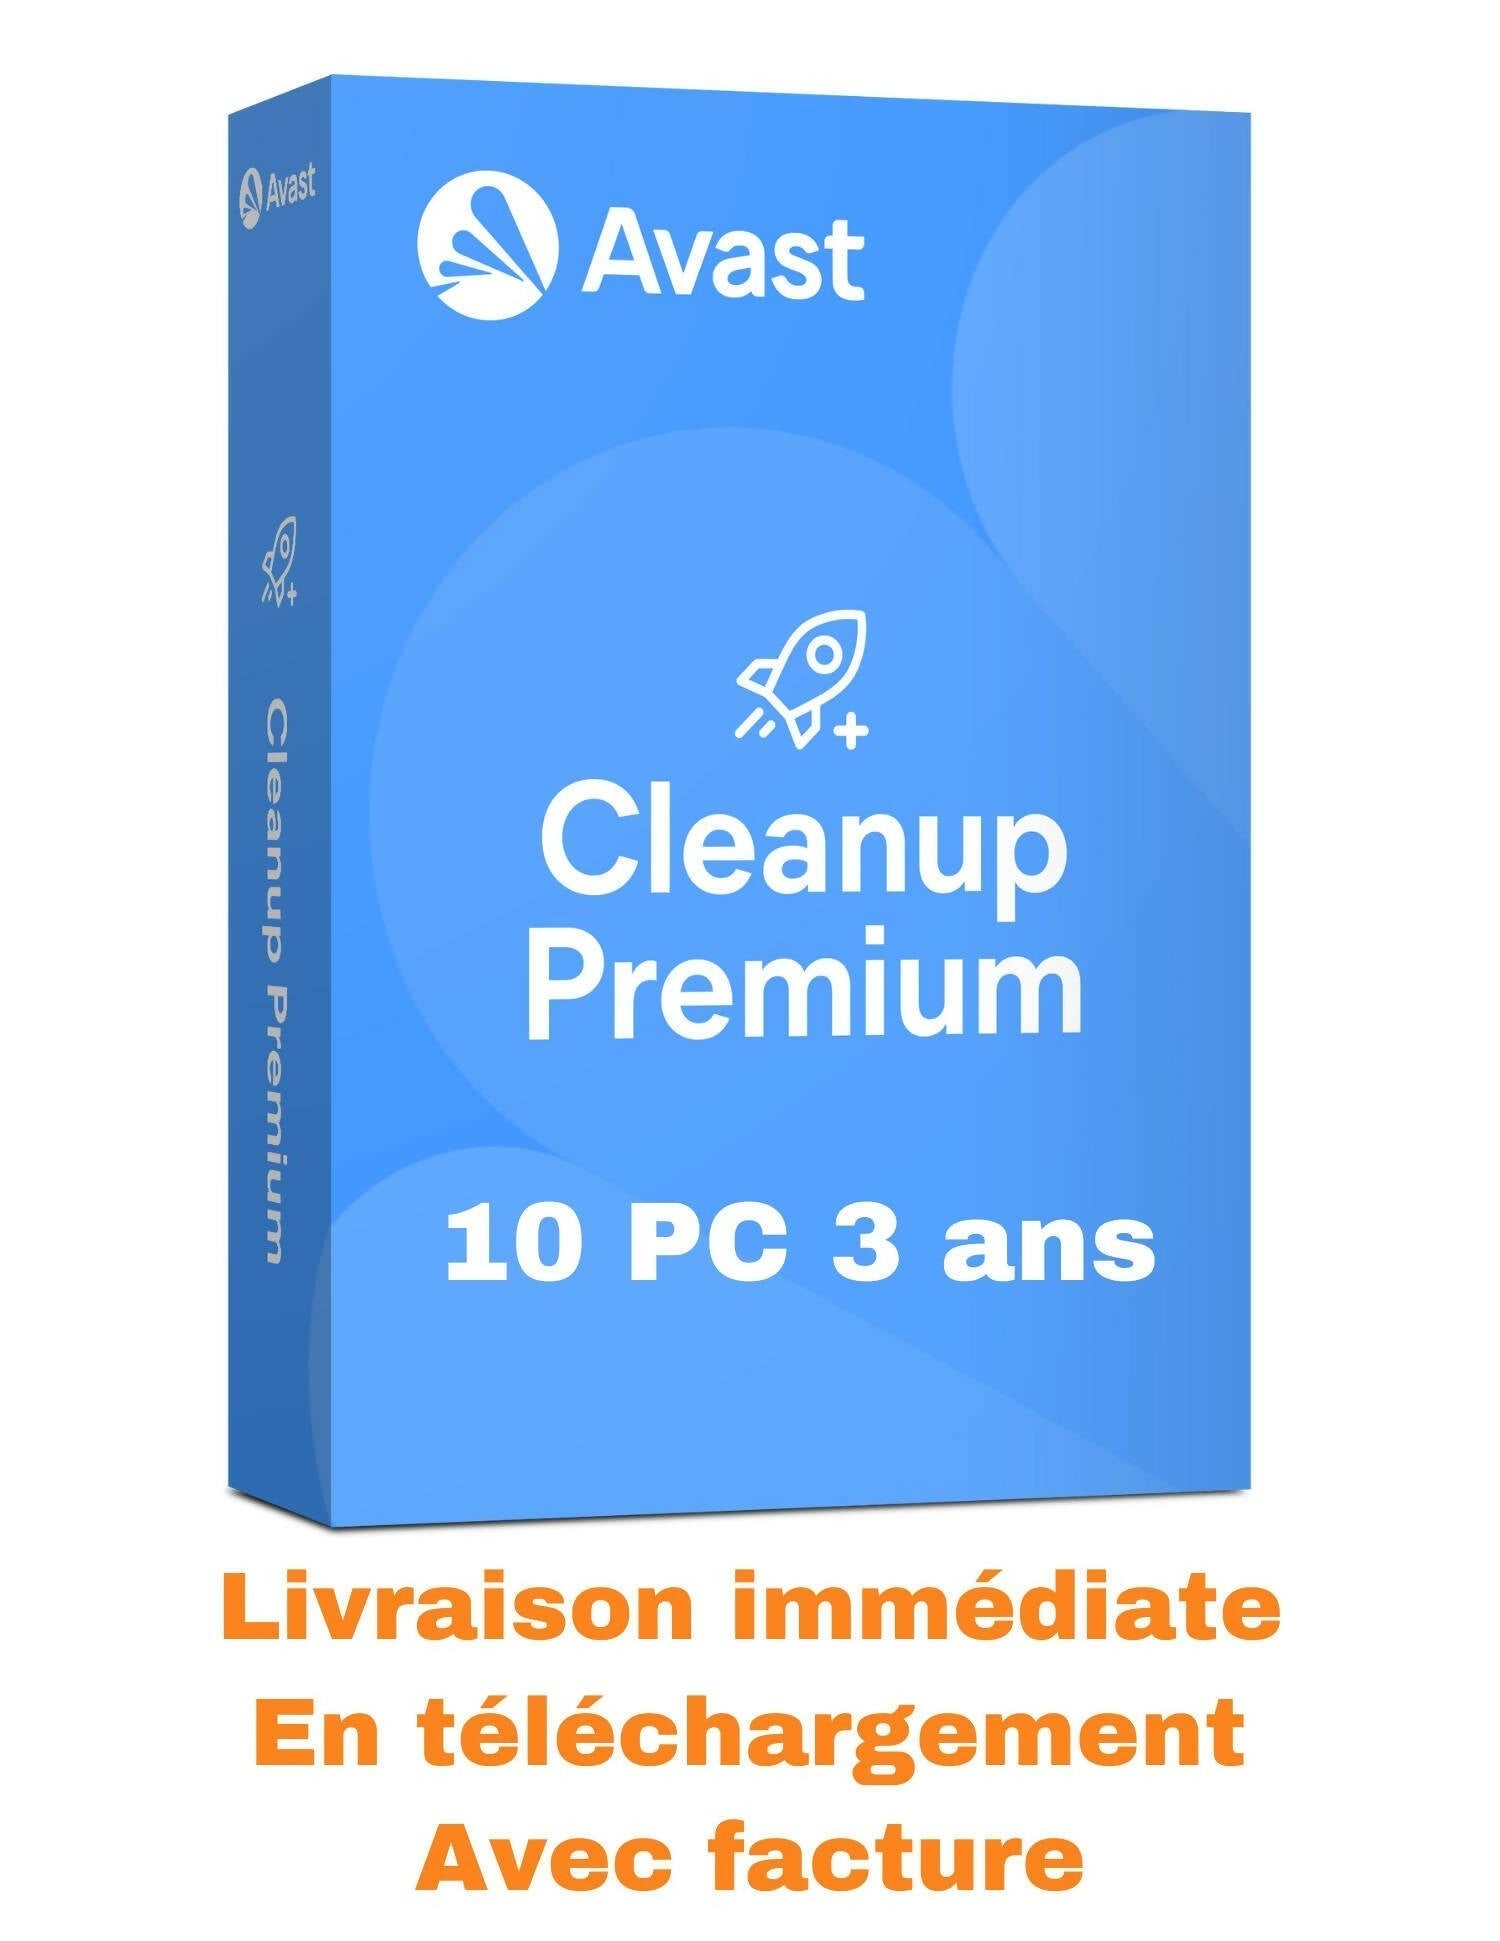 Avast Cleanup Premium 10 Appareils 3 ans clicktofournisseur.com